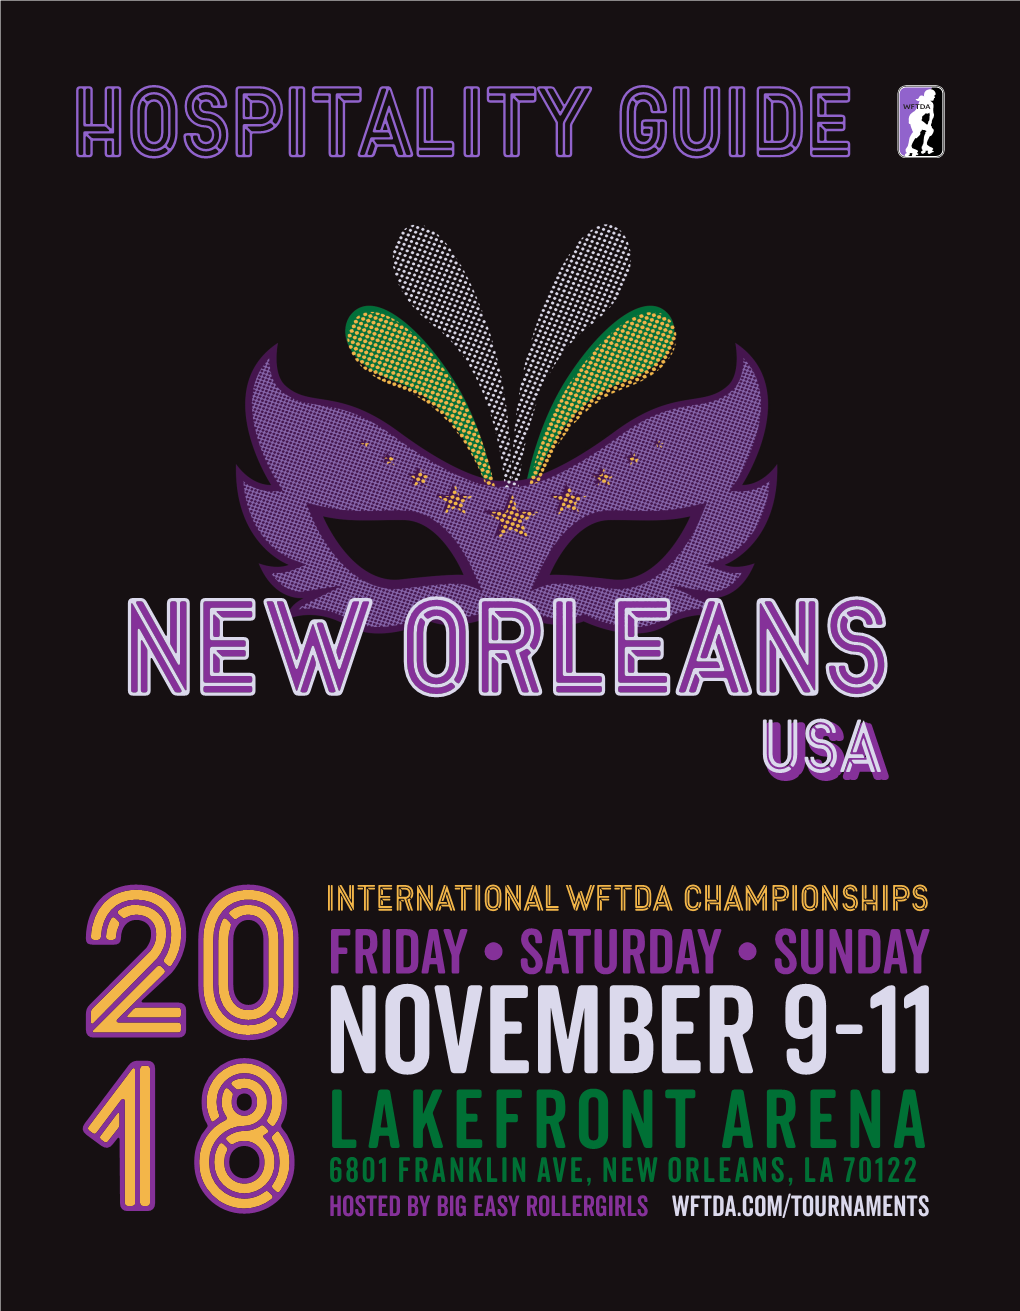 2018 International WFTDA Championships in New Orleans